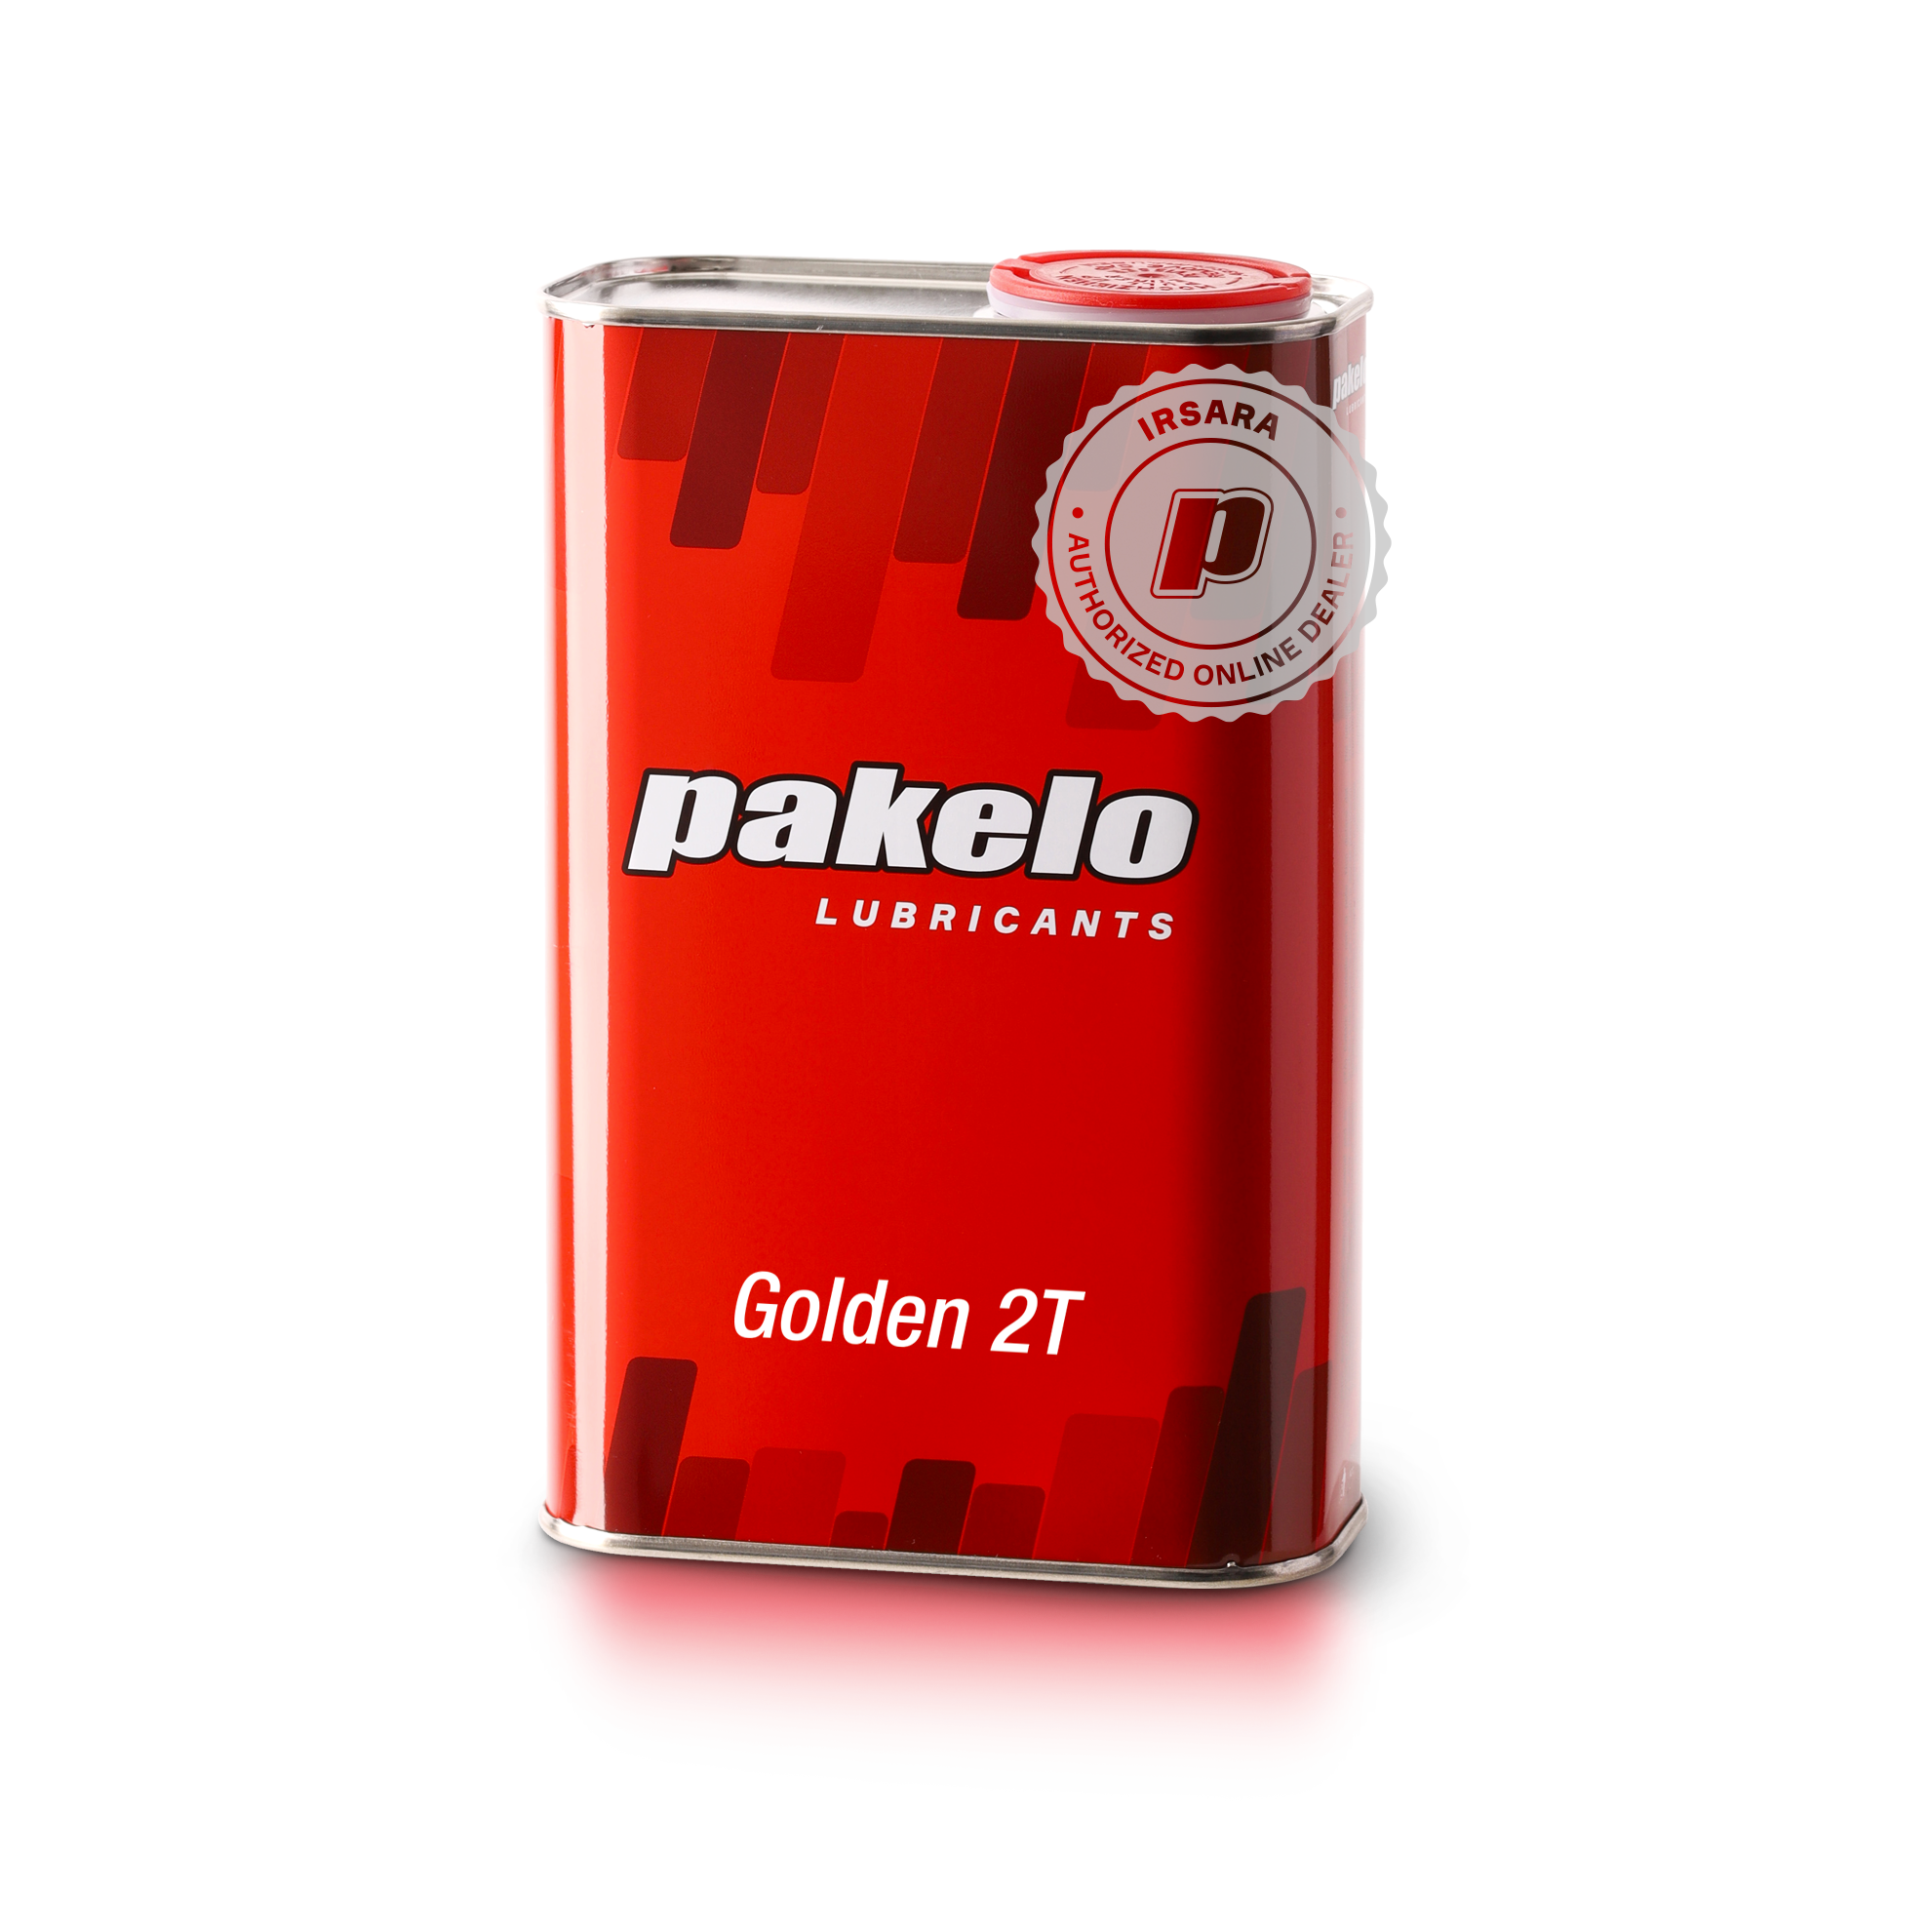 PAKELO GOLDEN 2T (1 L)